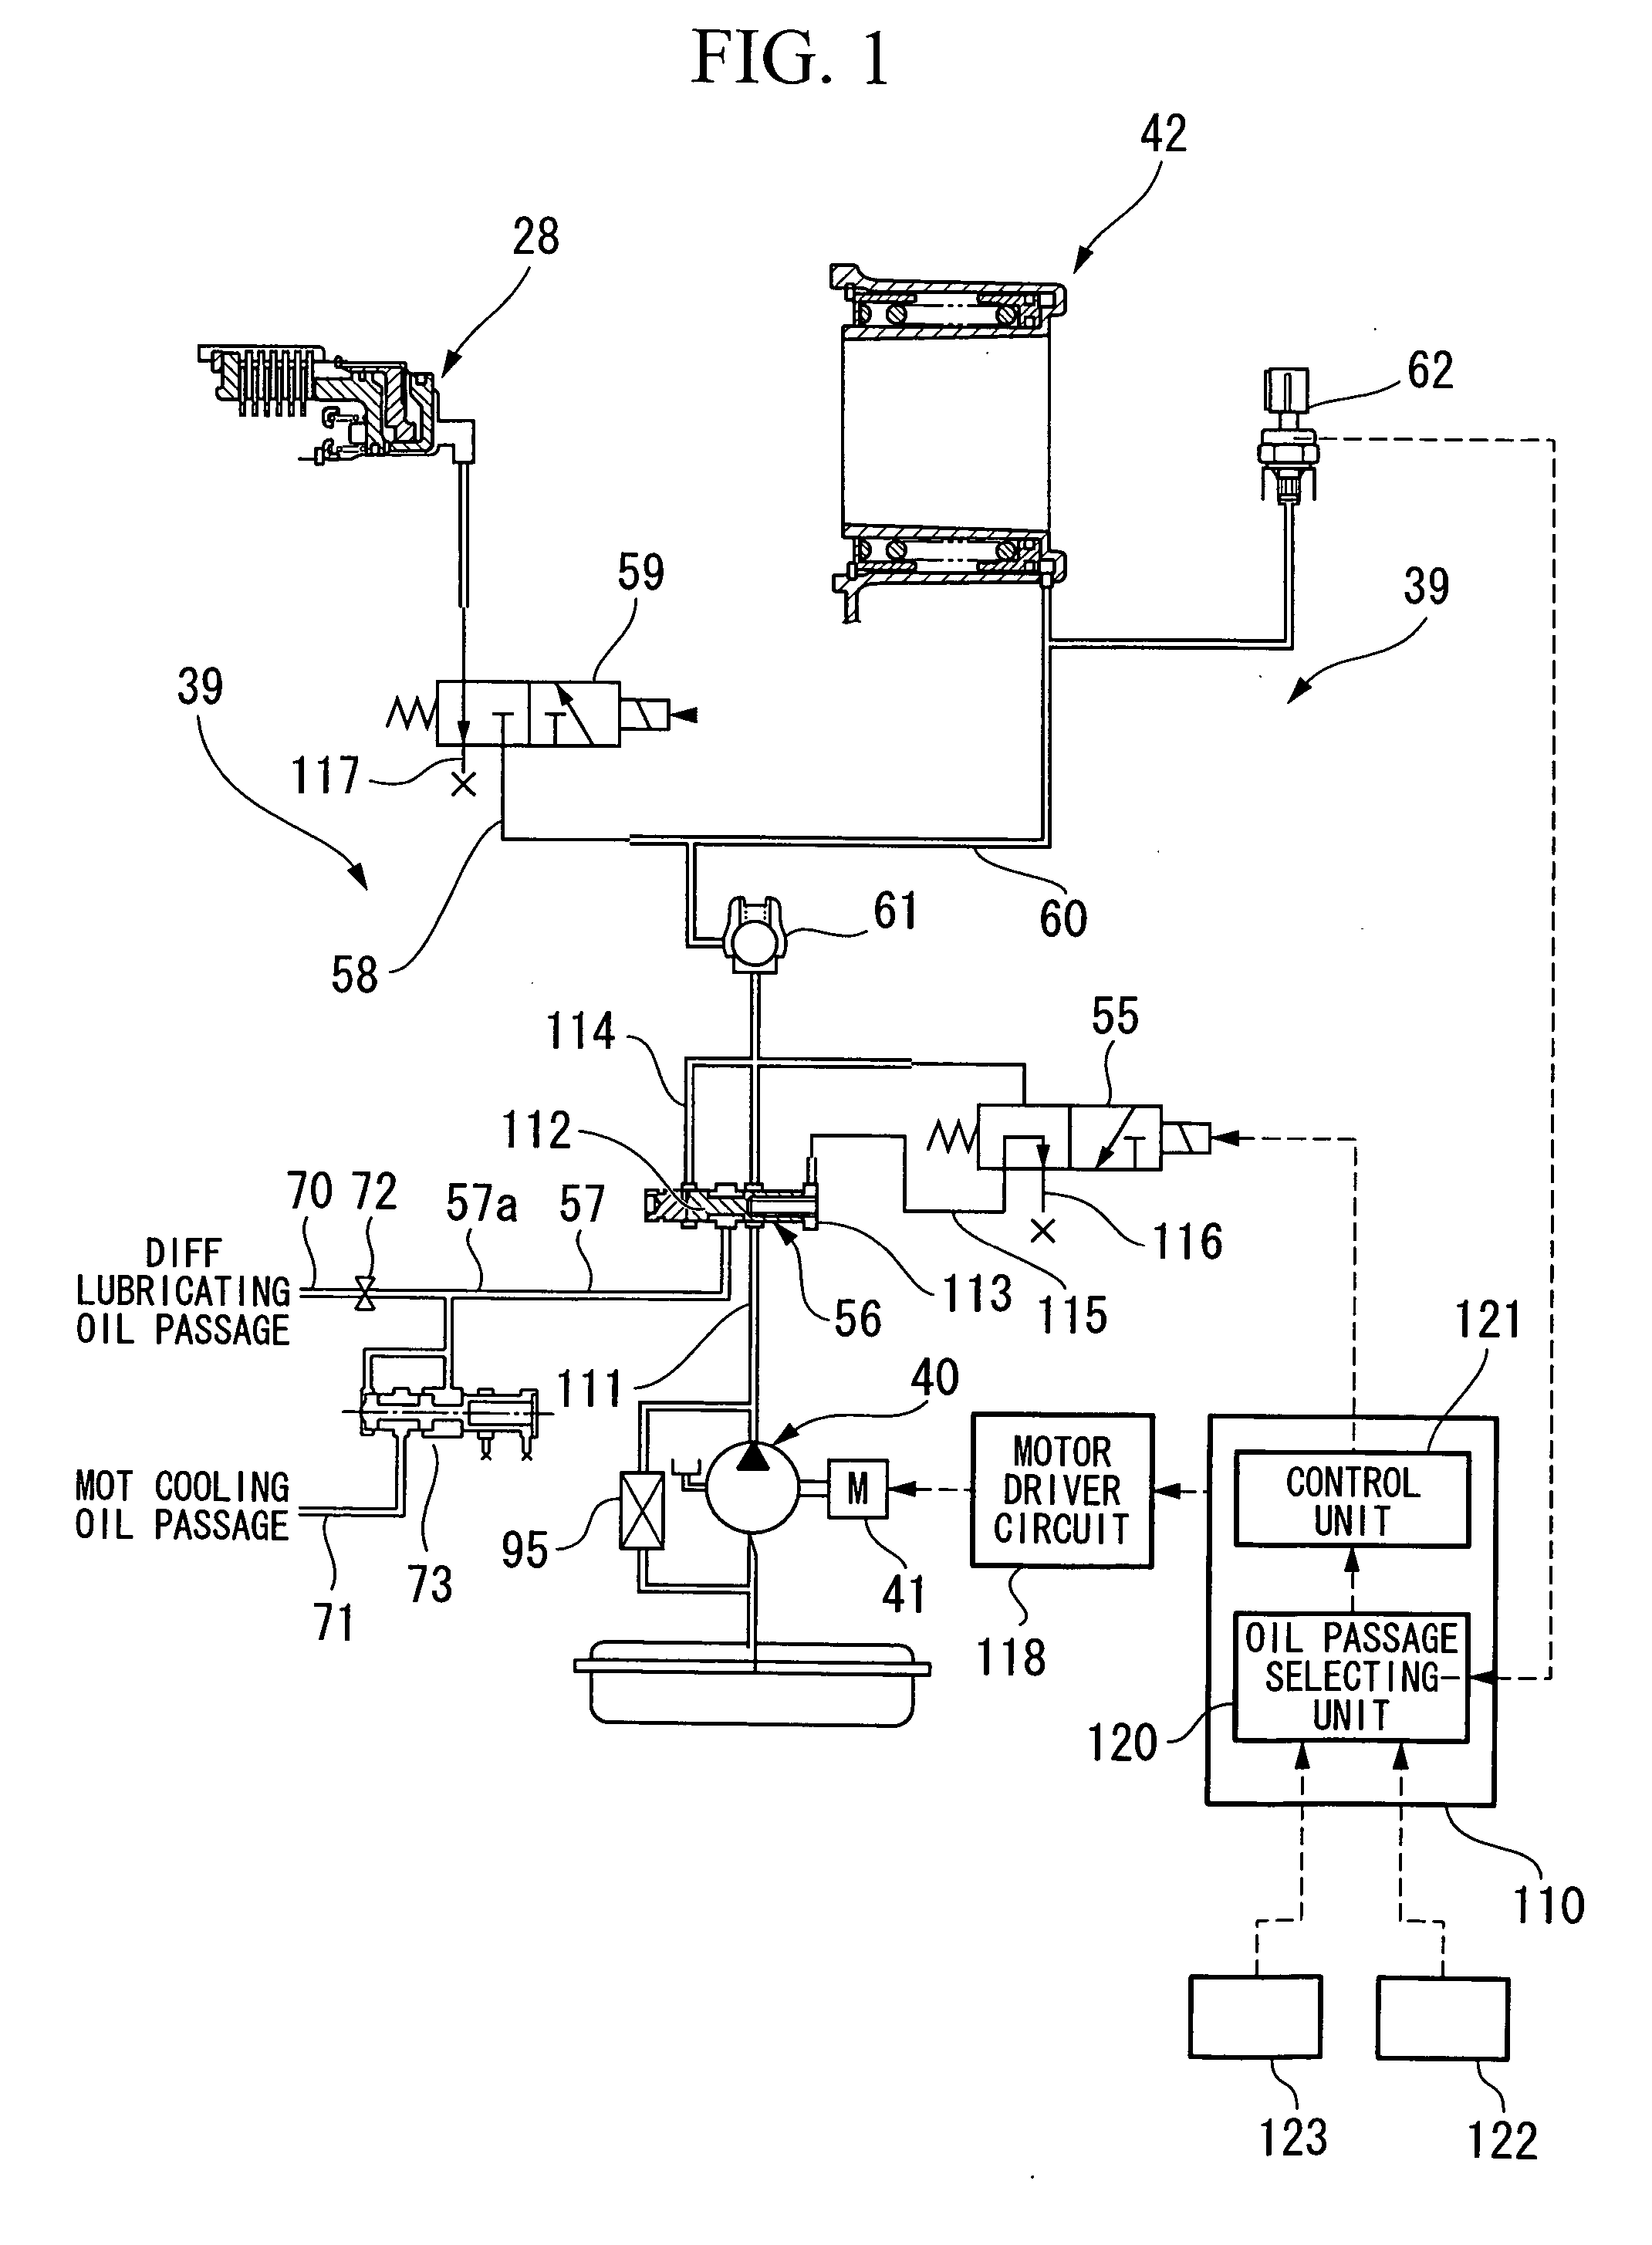 Hydraulic circuit control device